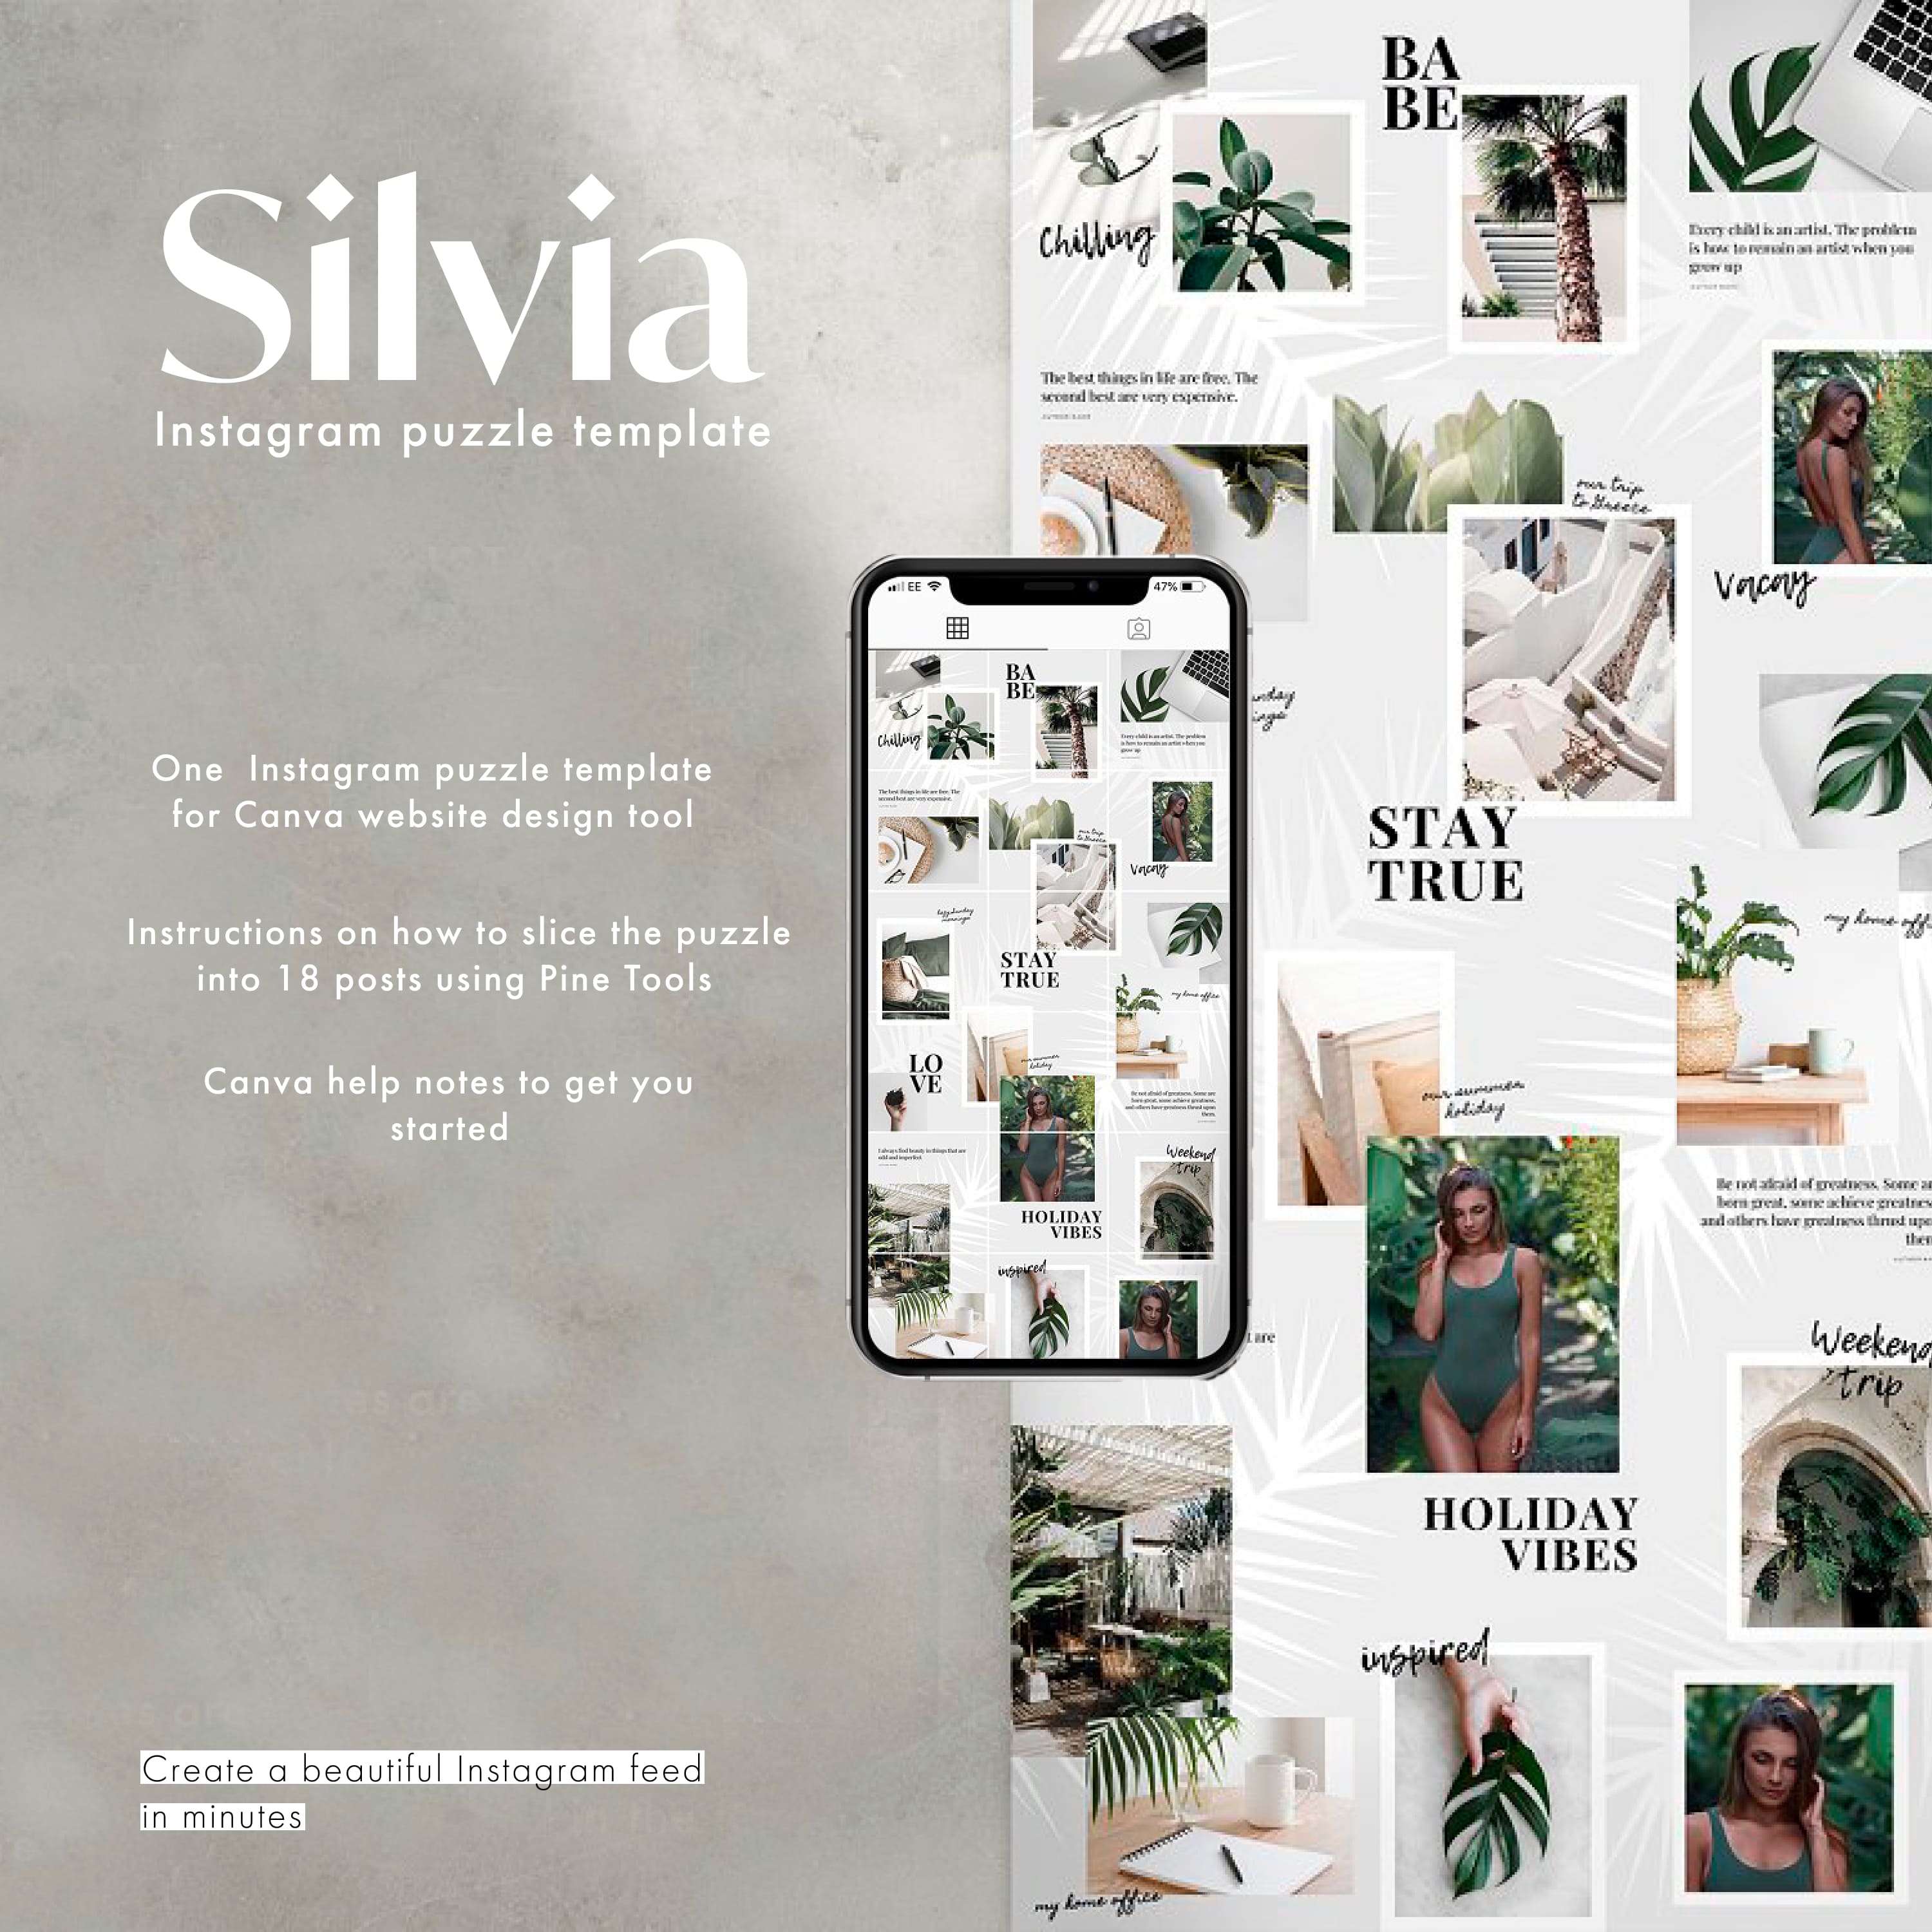 Silvia Instagram puzzle | CANVA cover.